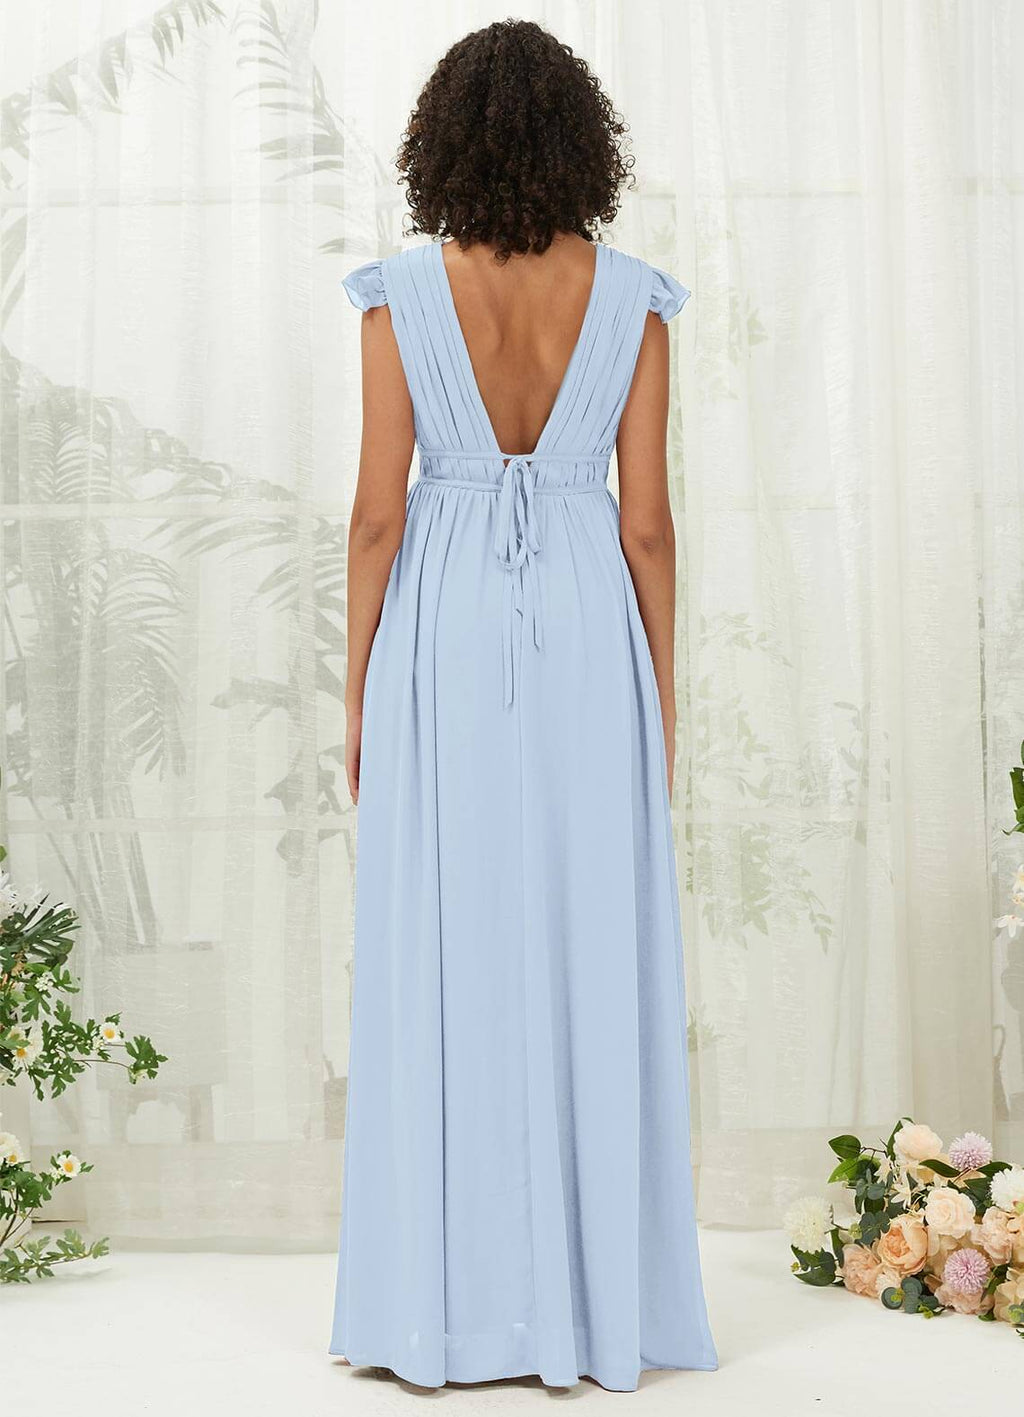 NZ Bridal Cornflower Blue Slit Chiffon Bridesmaid Dress R0410 Collins a